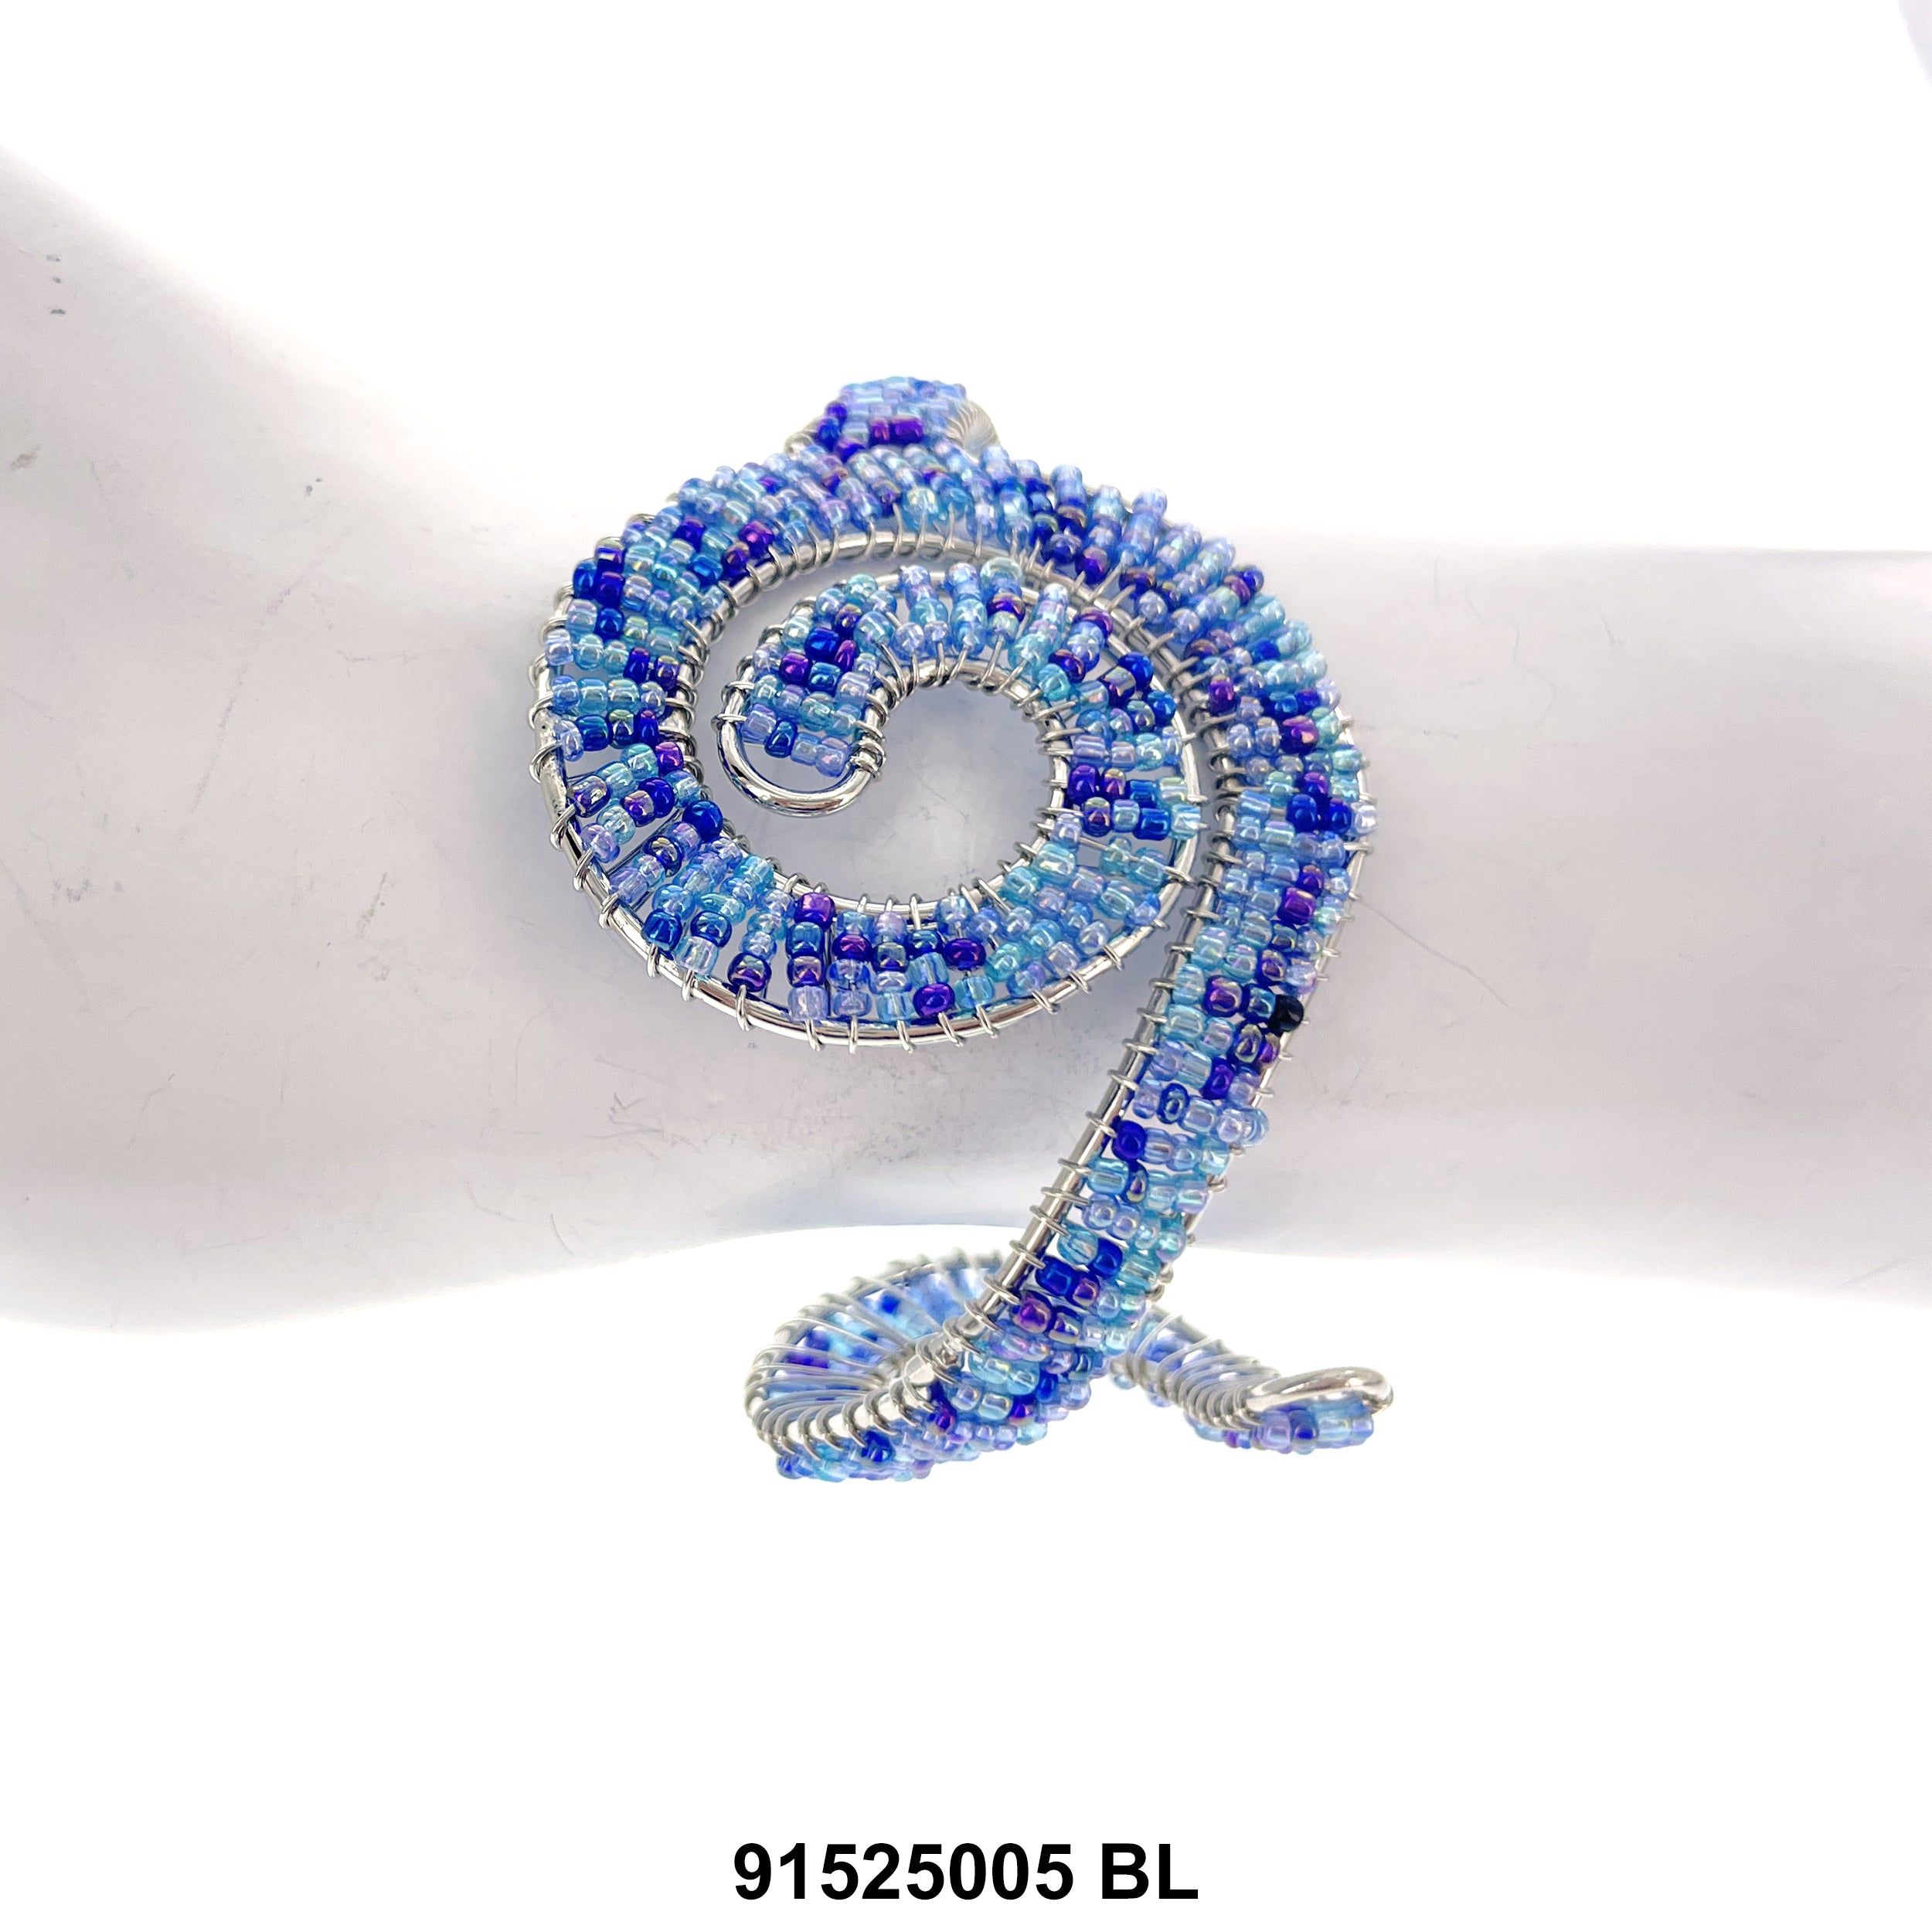 Cuff Bangle Bracelet 91525005 BL